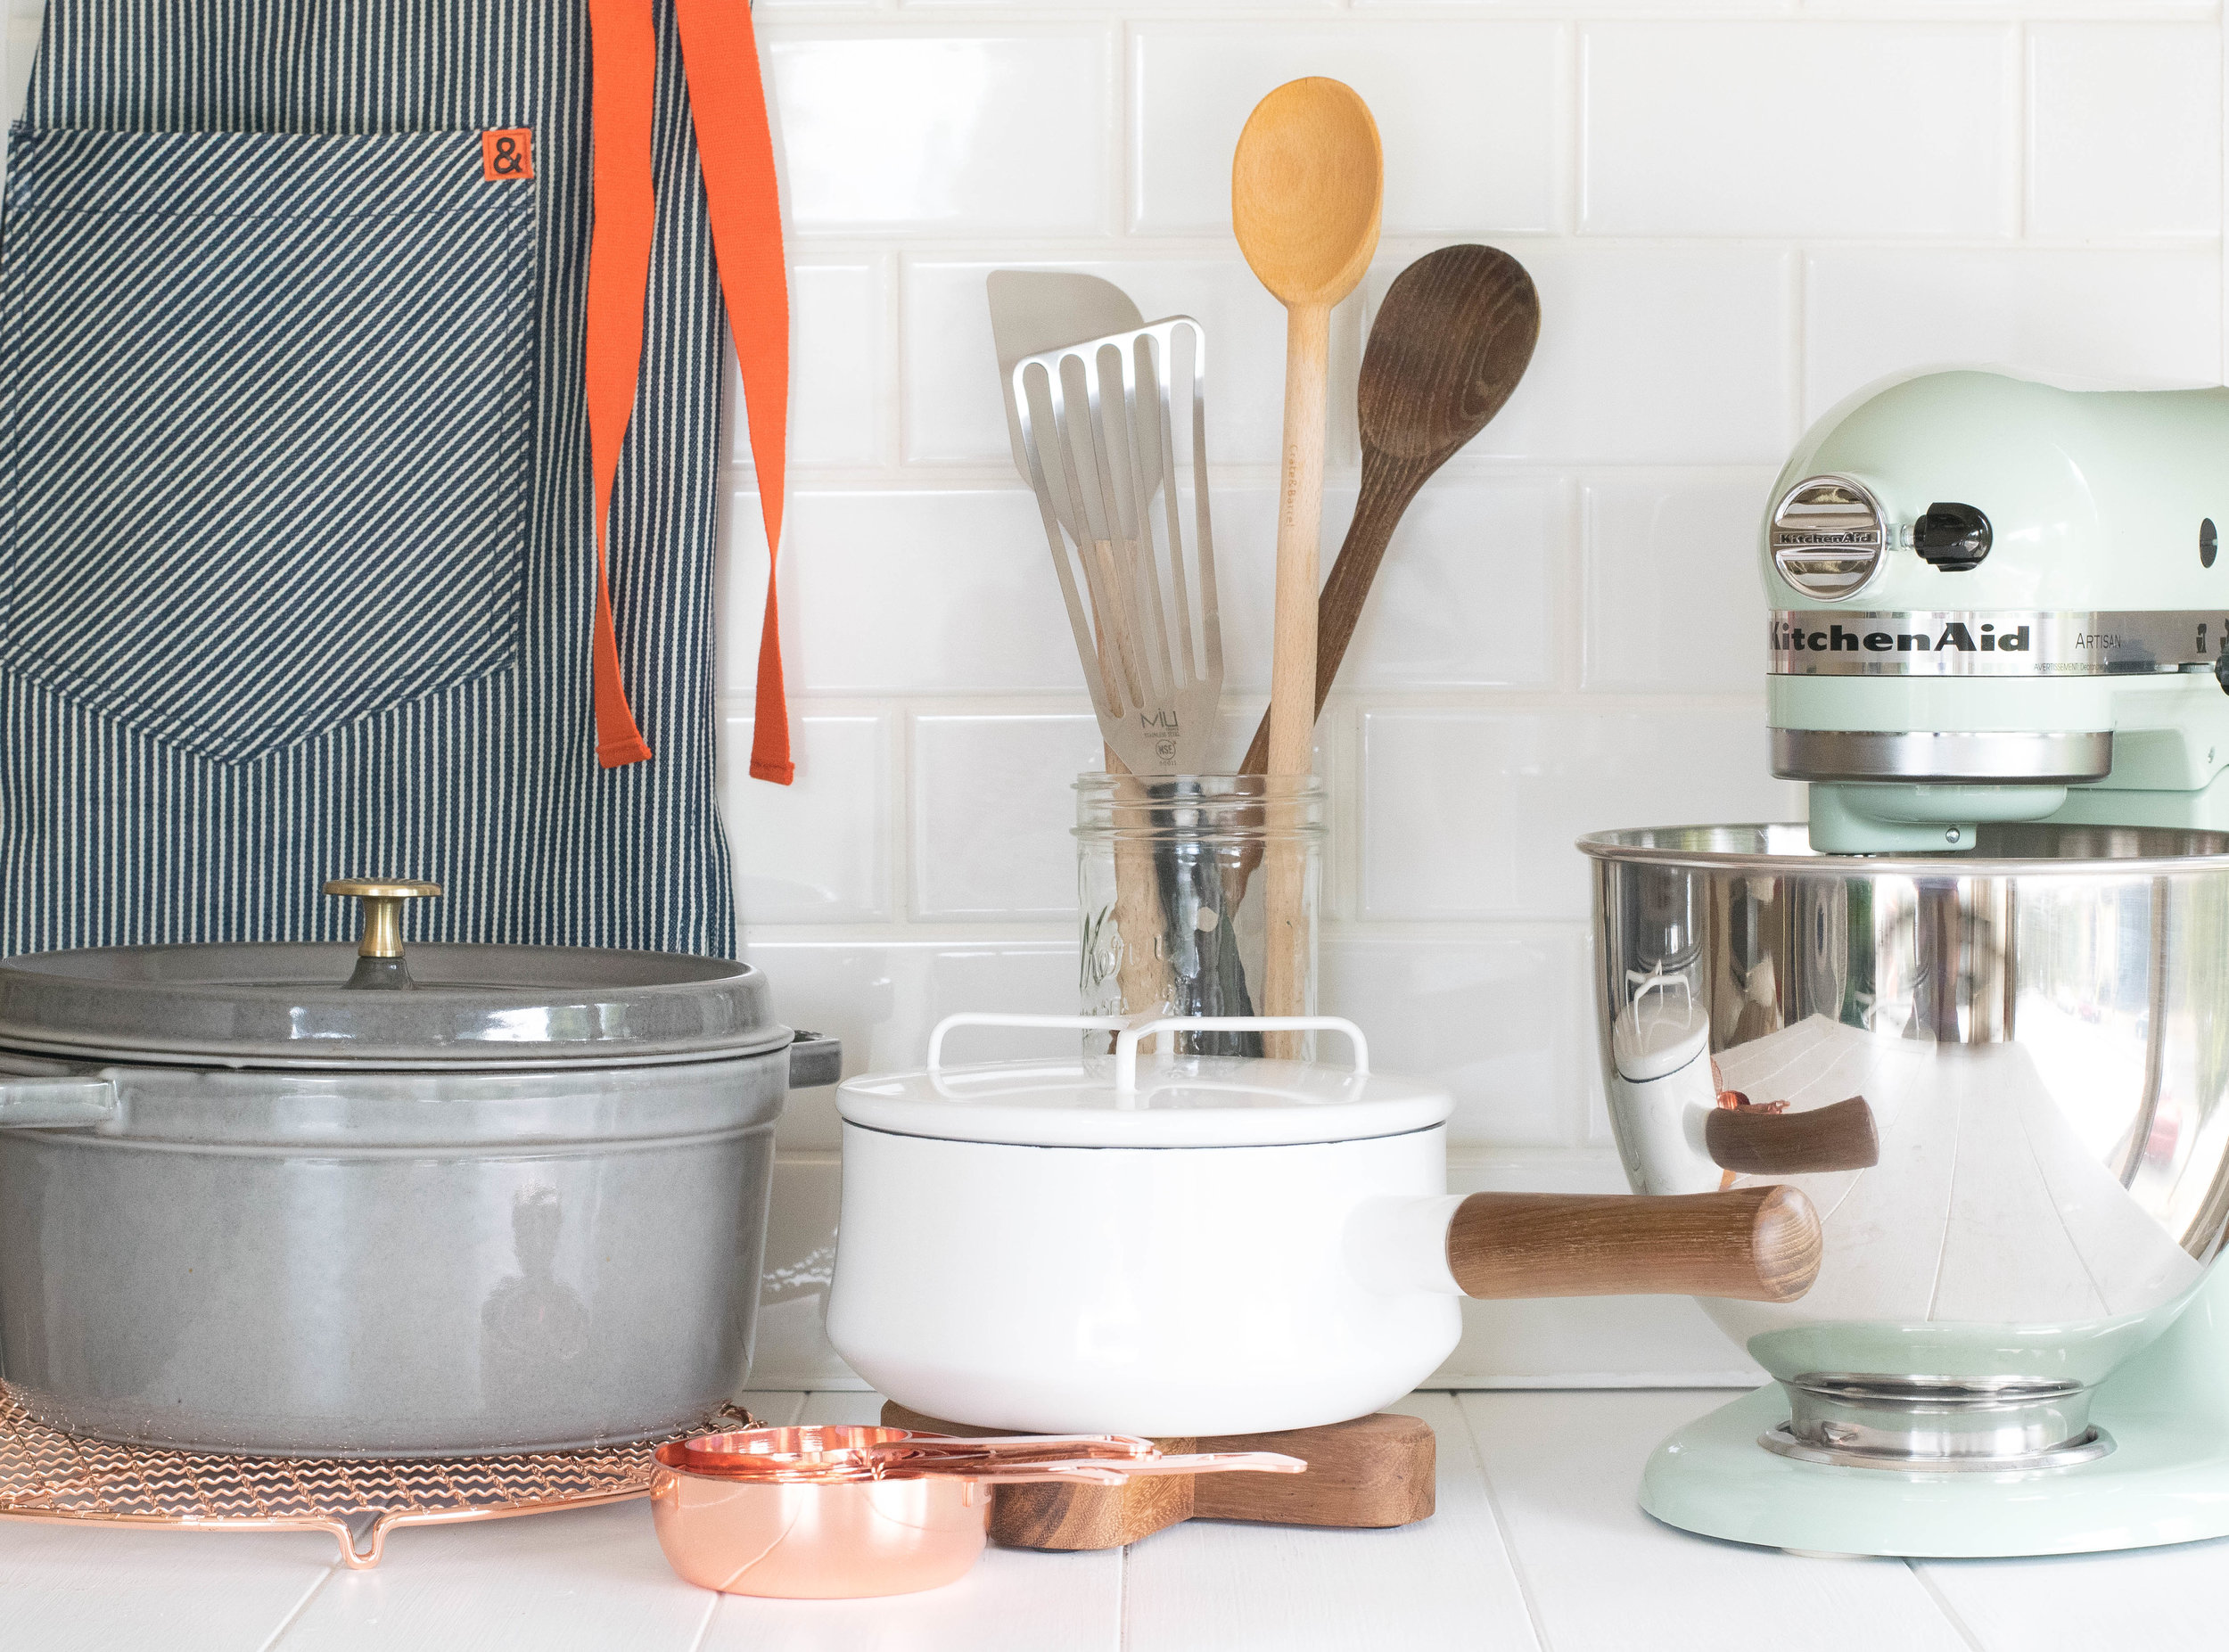 20 Genius, Super Useful Kitchen Tools  Kitchen gadgets, Modern kitchen  gadgets, Kitchen tools and gadgets